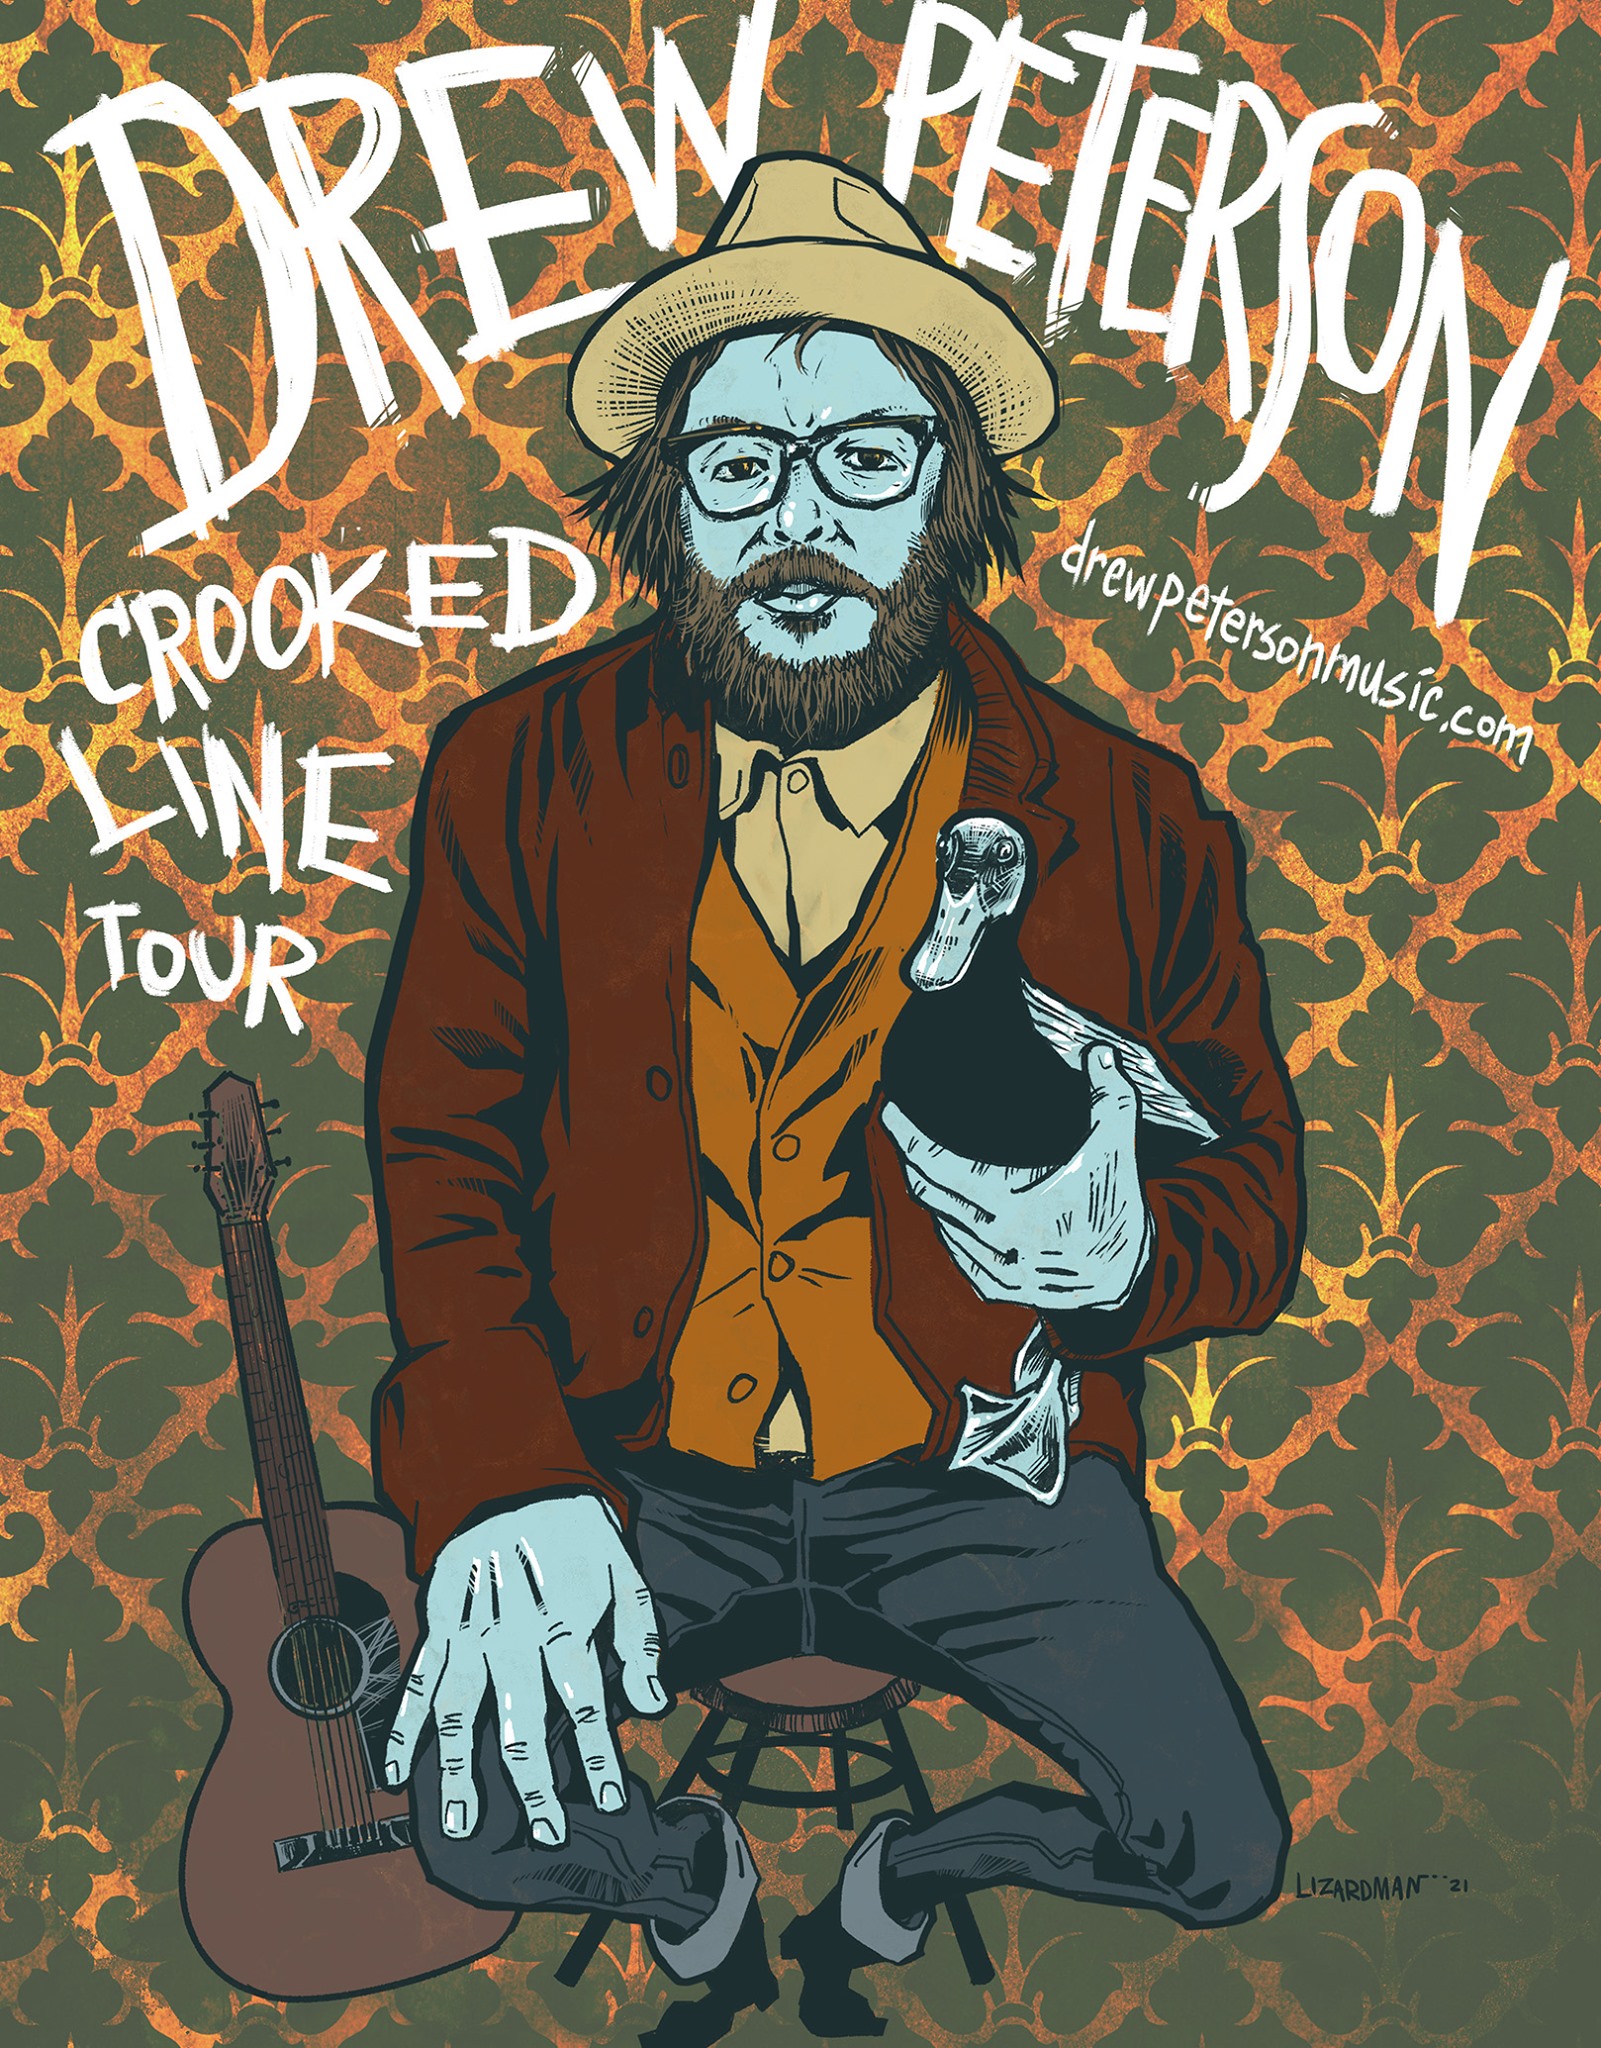 Drew Peterson Crooked Line Tour